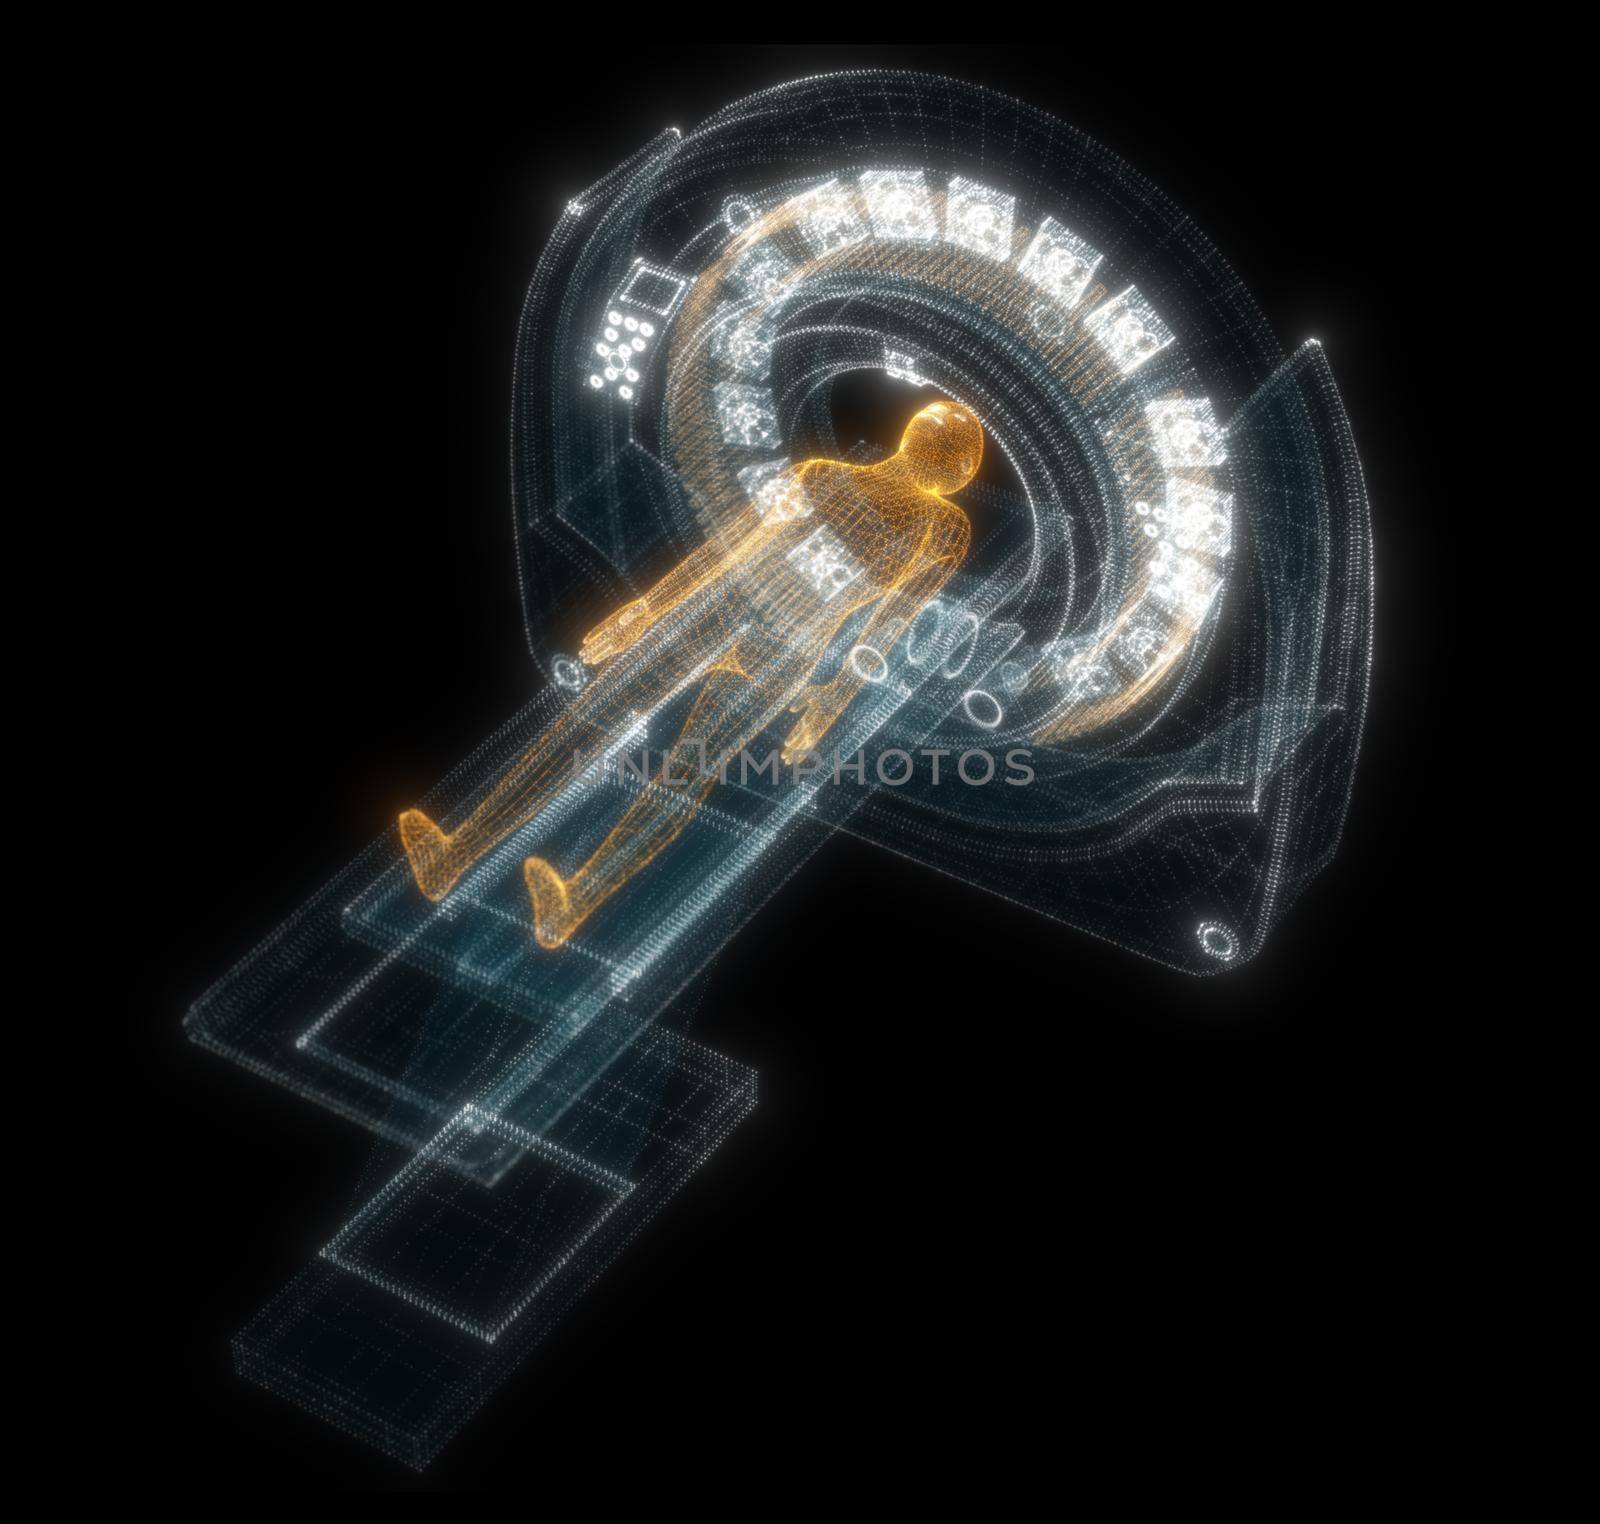 Digital MRI scan with patient Hologram. Medicine and Technology Concept. Interface element. 3d illustration